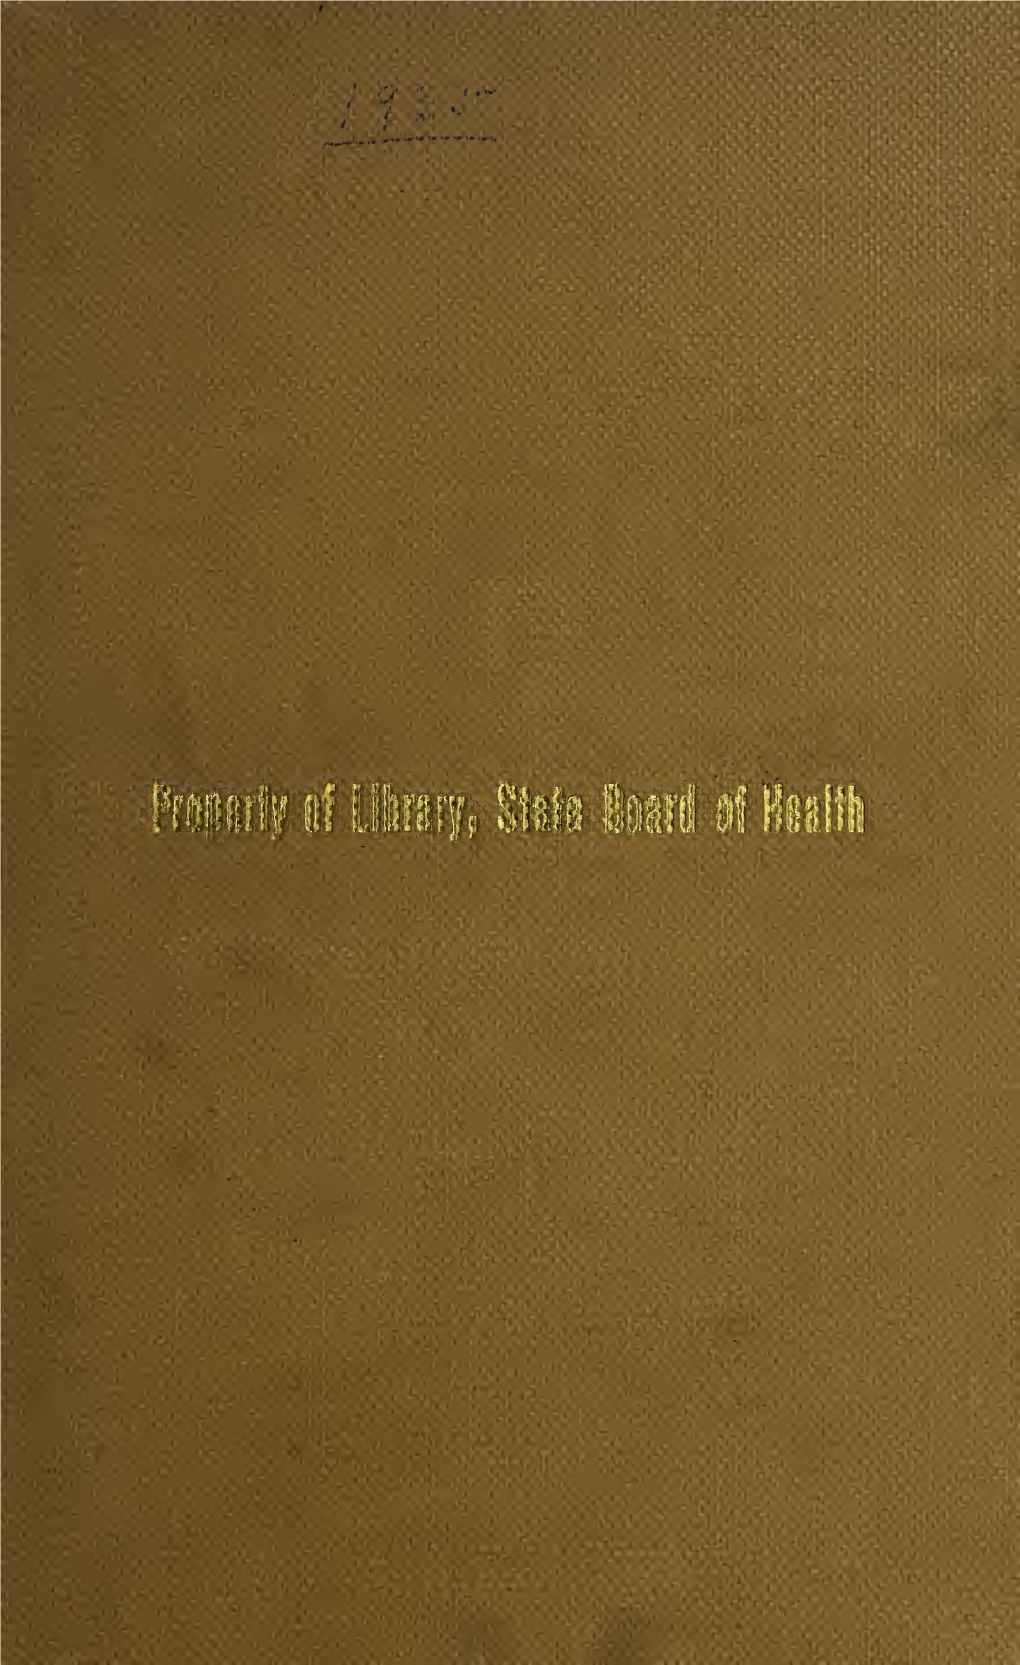 1935 Registration of Practitioners of Medicine in Florida